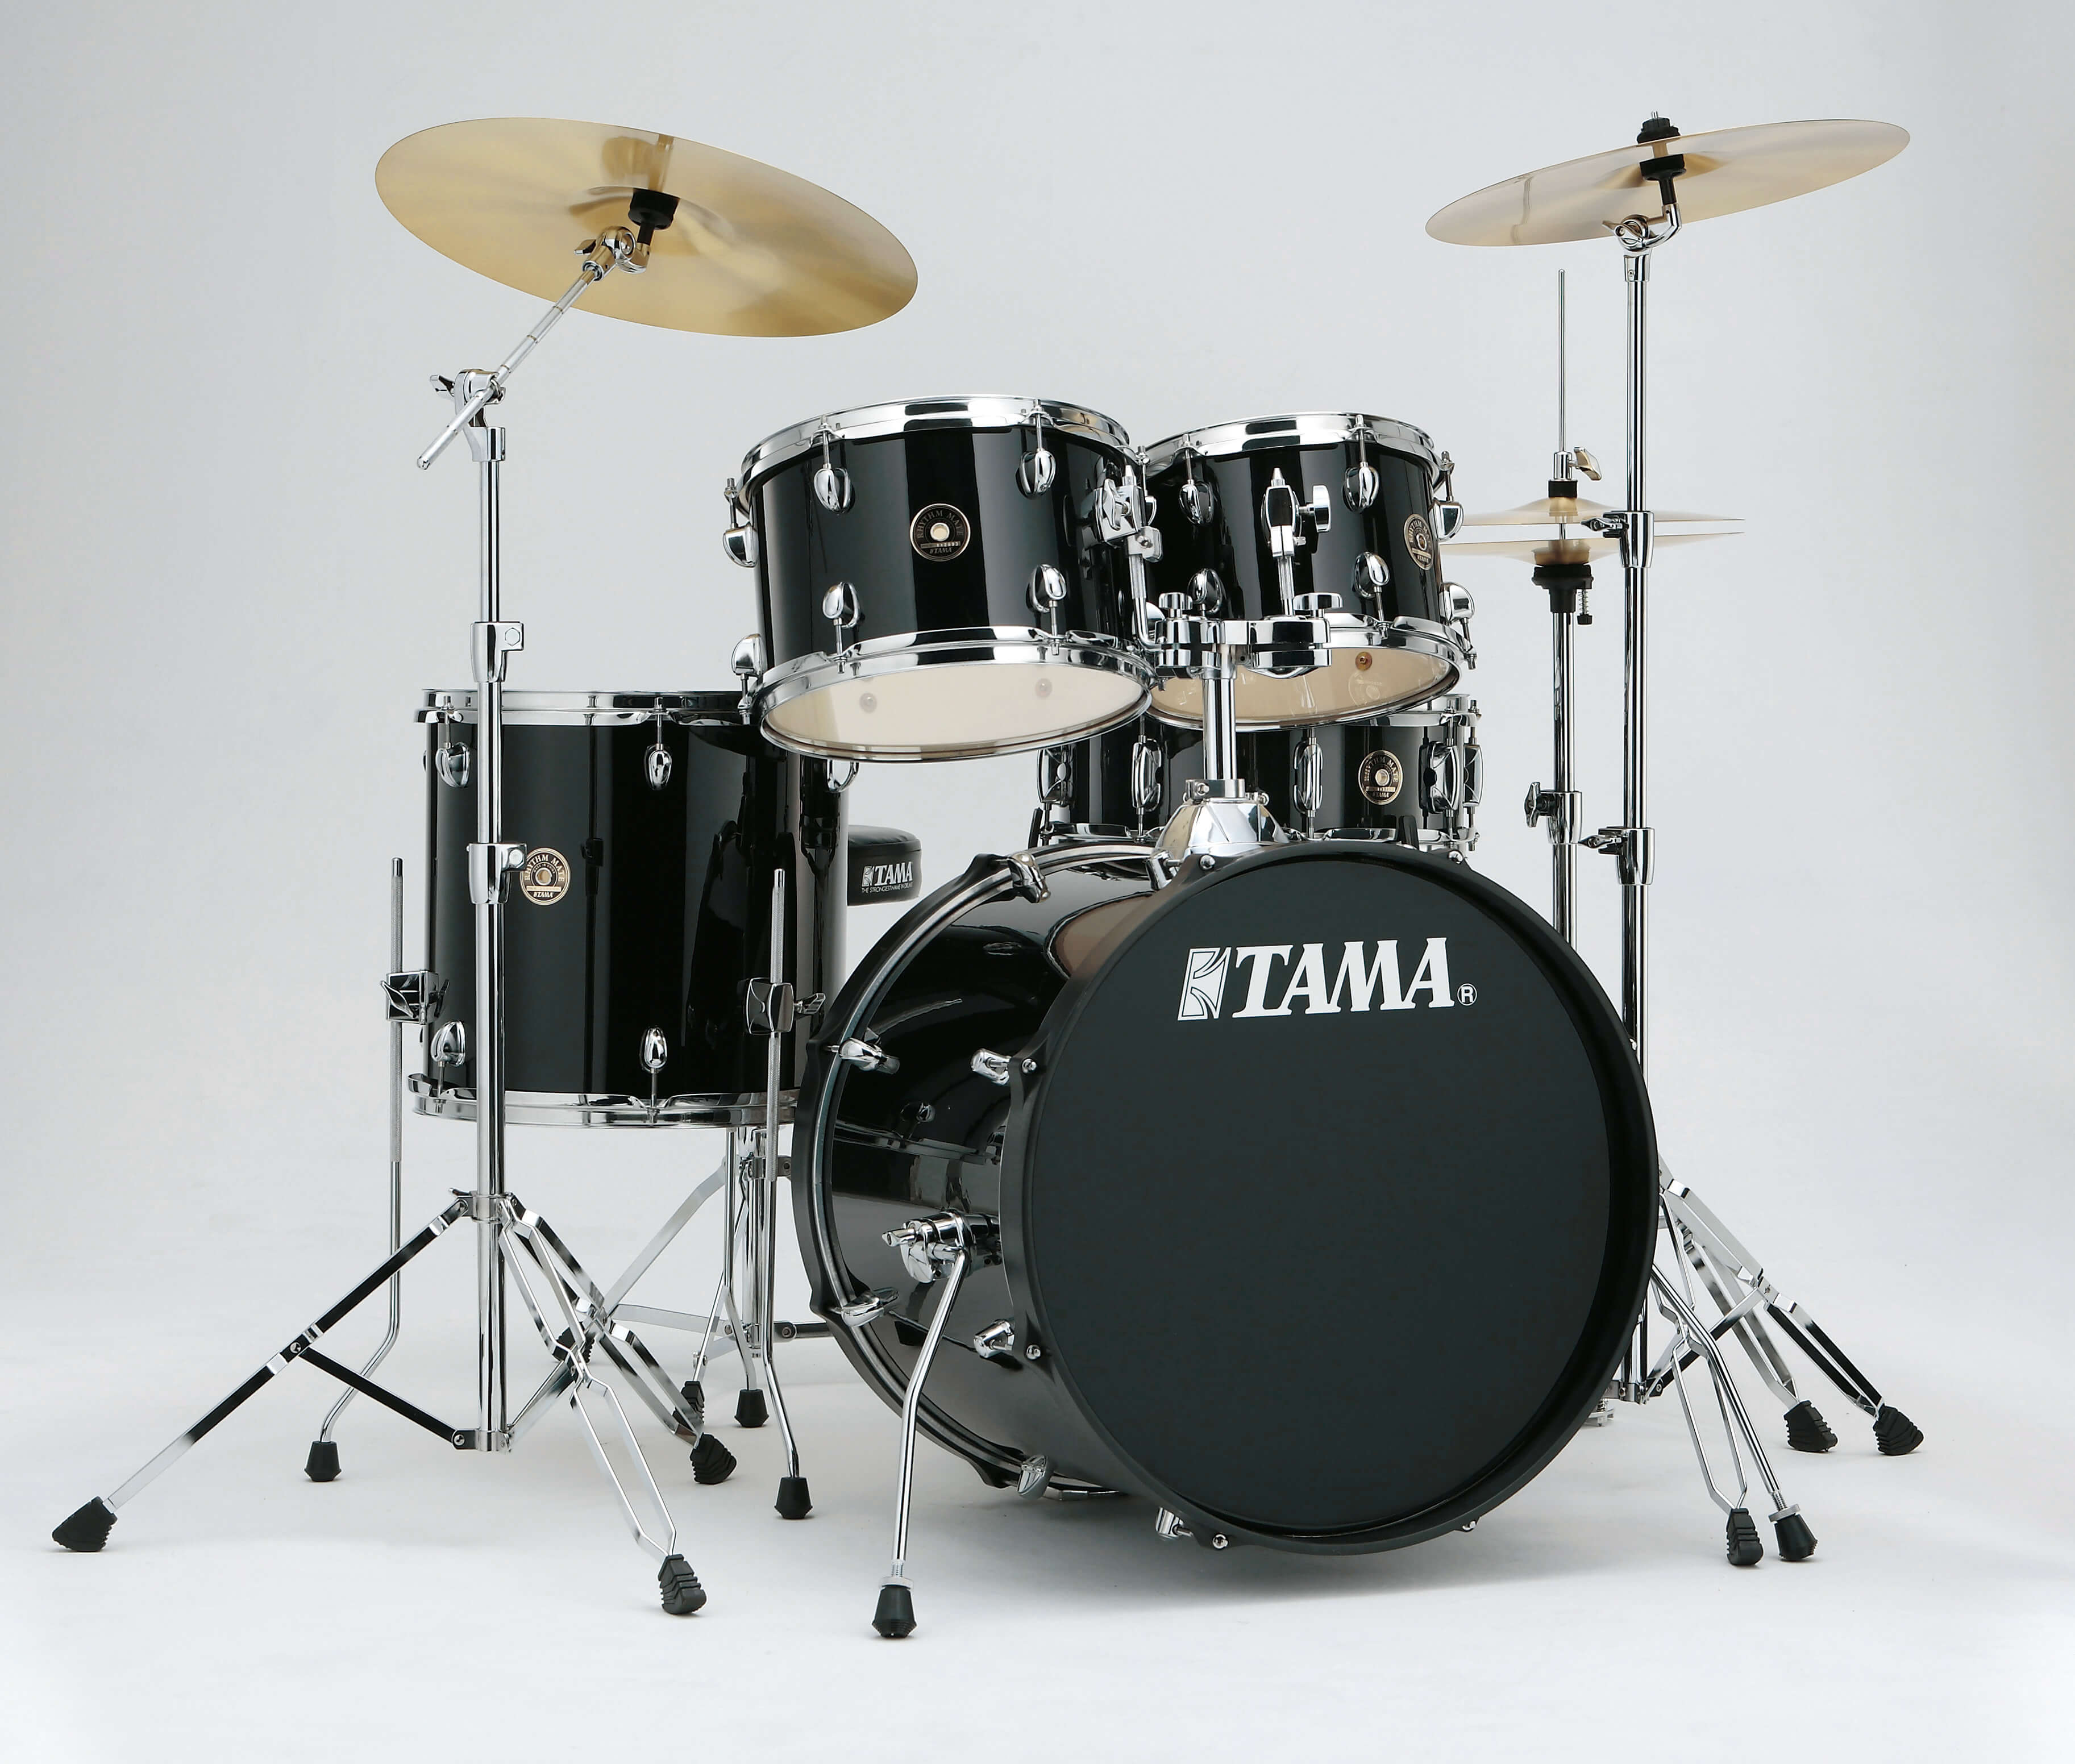 Tama Drumset